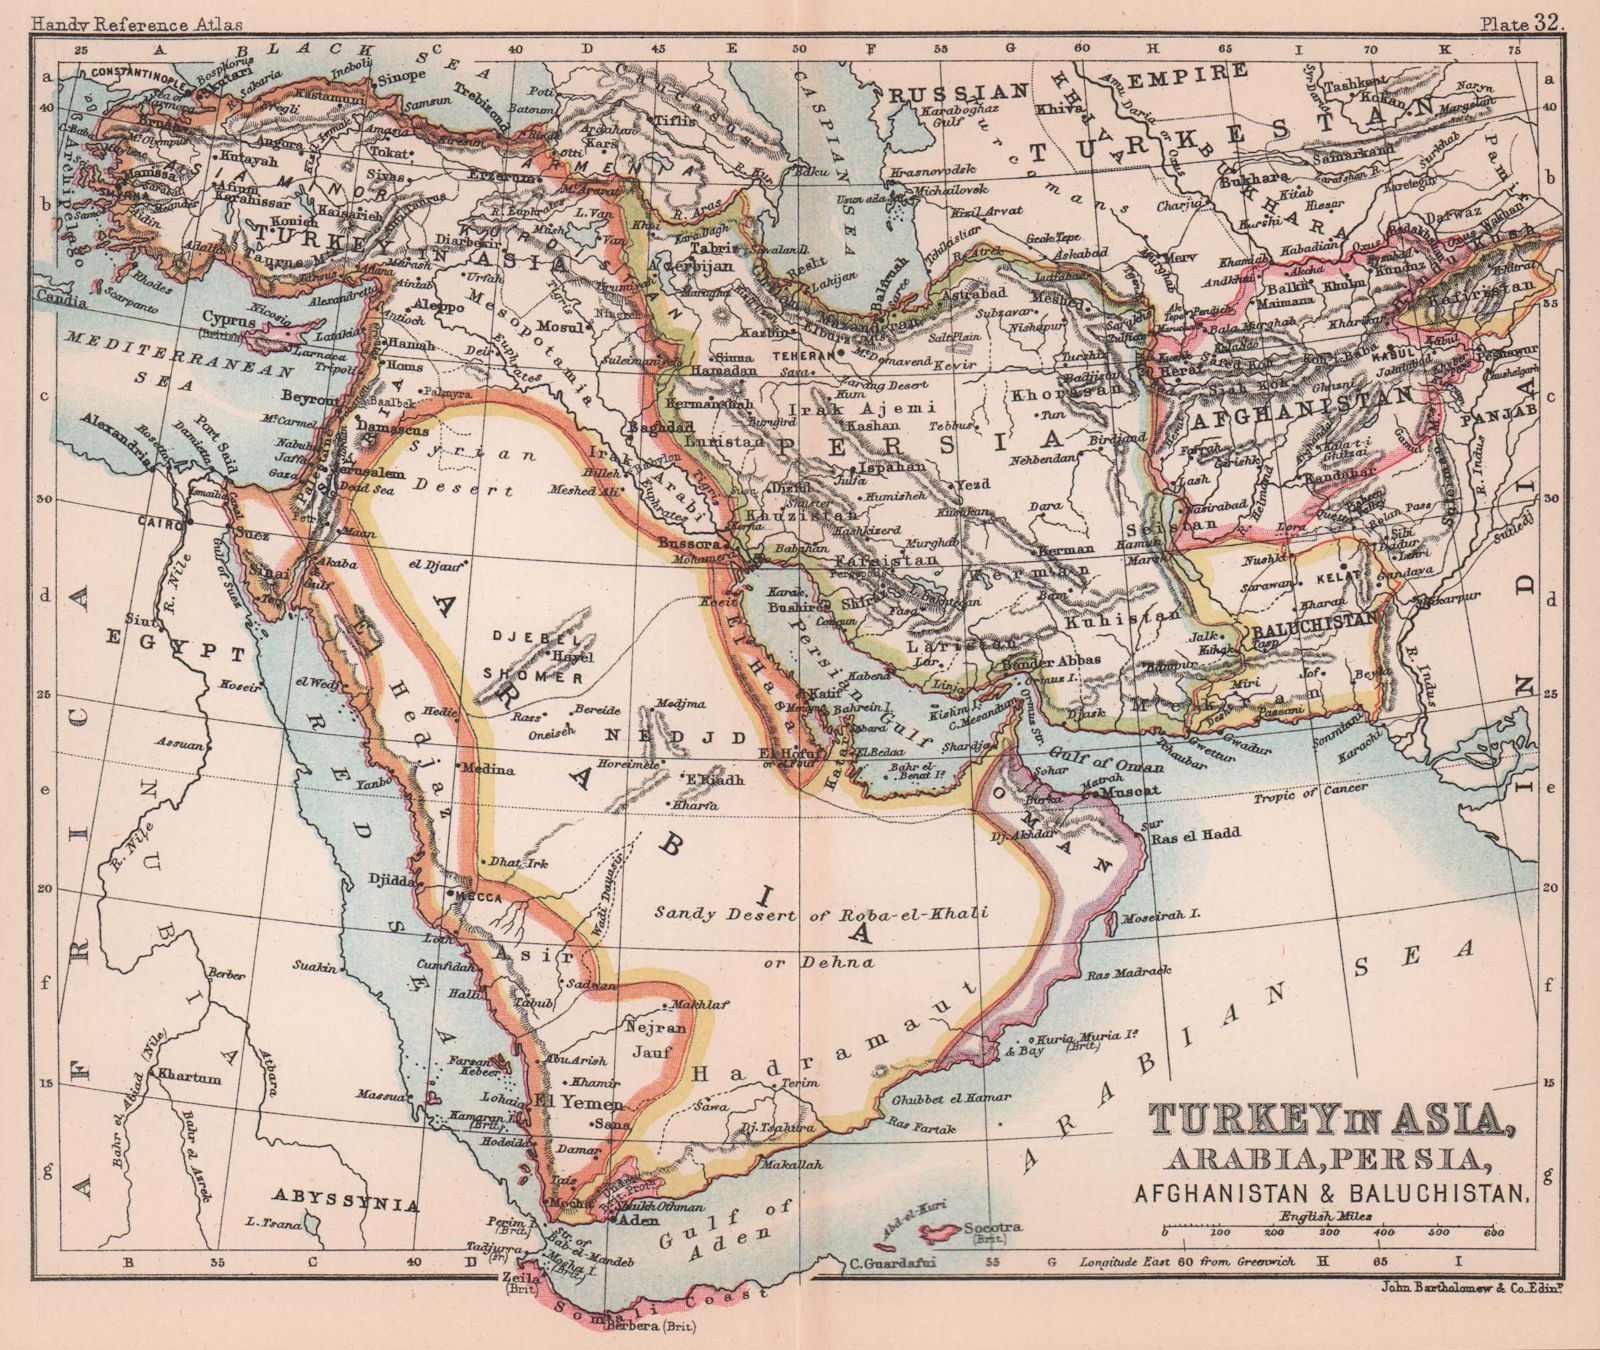 Associate Product Turkey in Asia Arabia Persia Afghanistan Baluchistan. Shardja/Sharja 1893 map